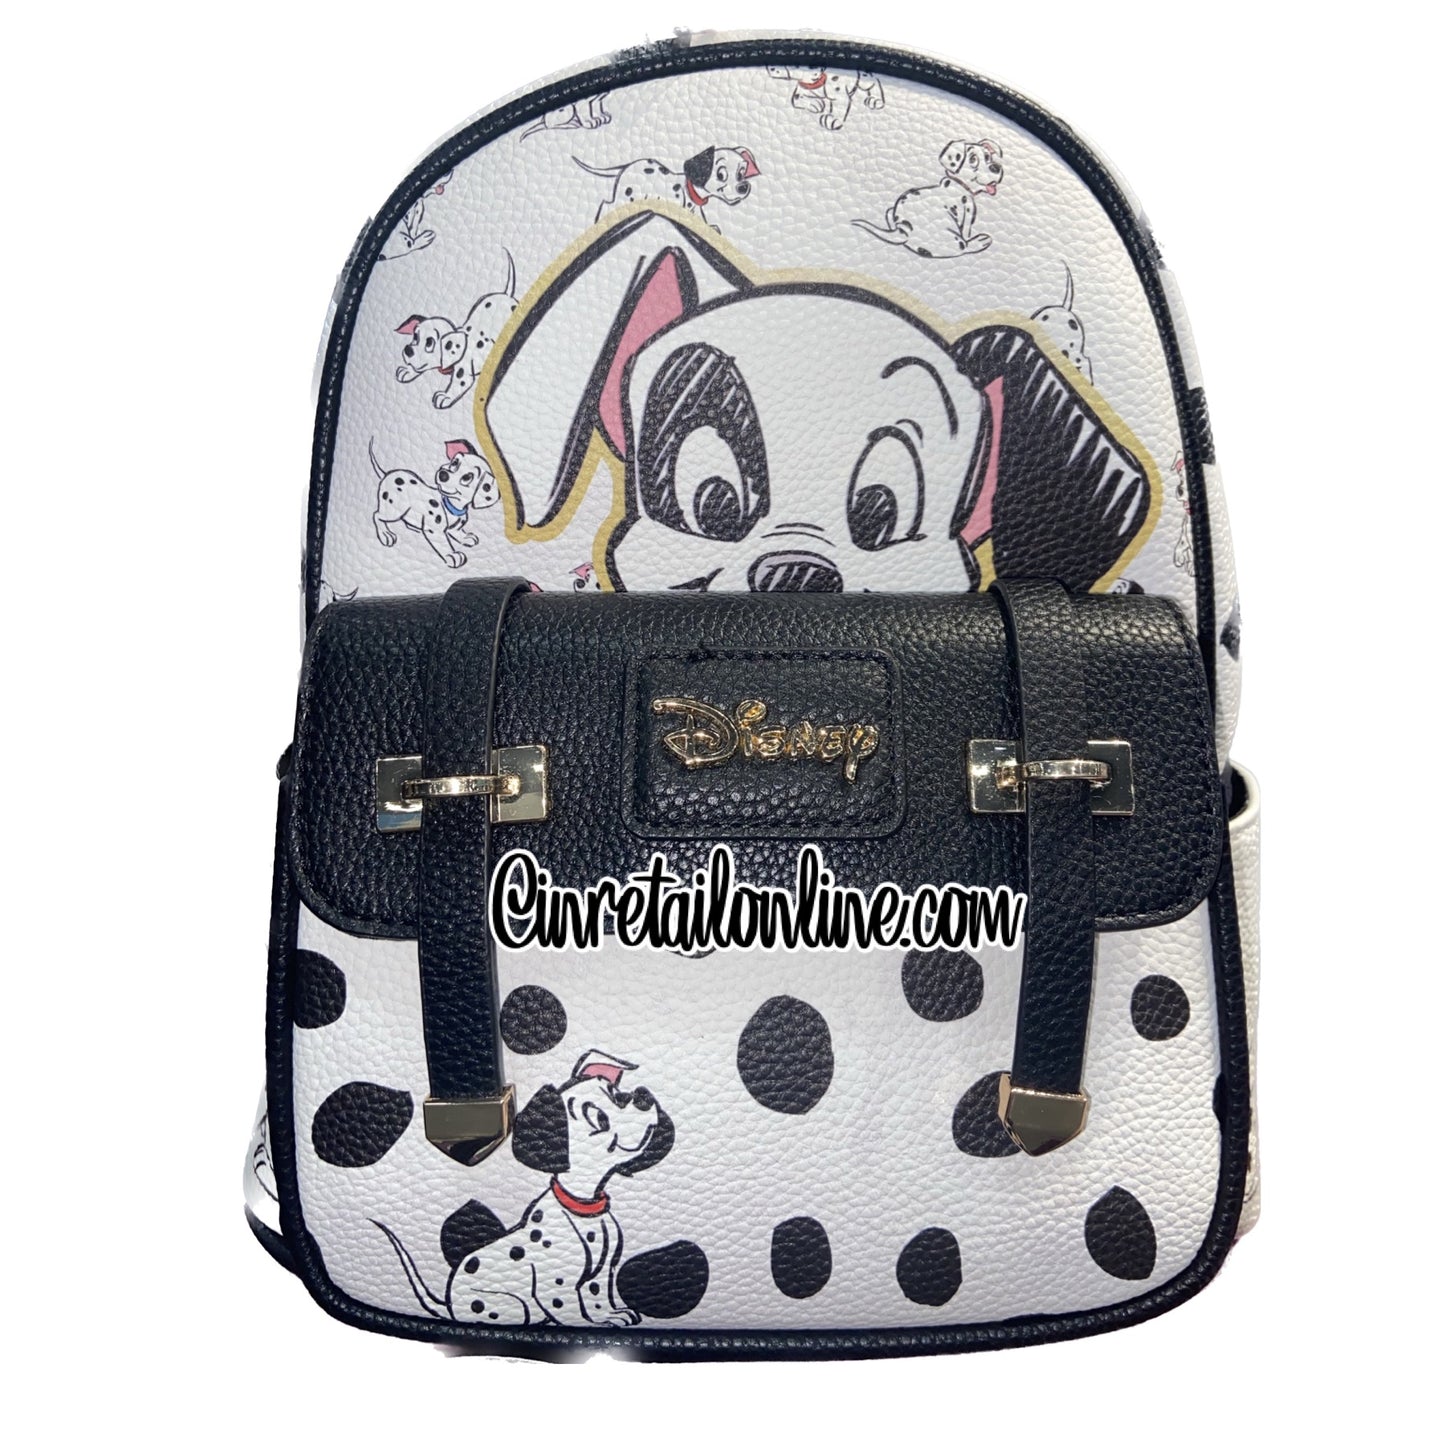 101 Dalmatians Disney backpack